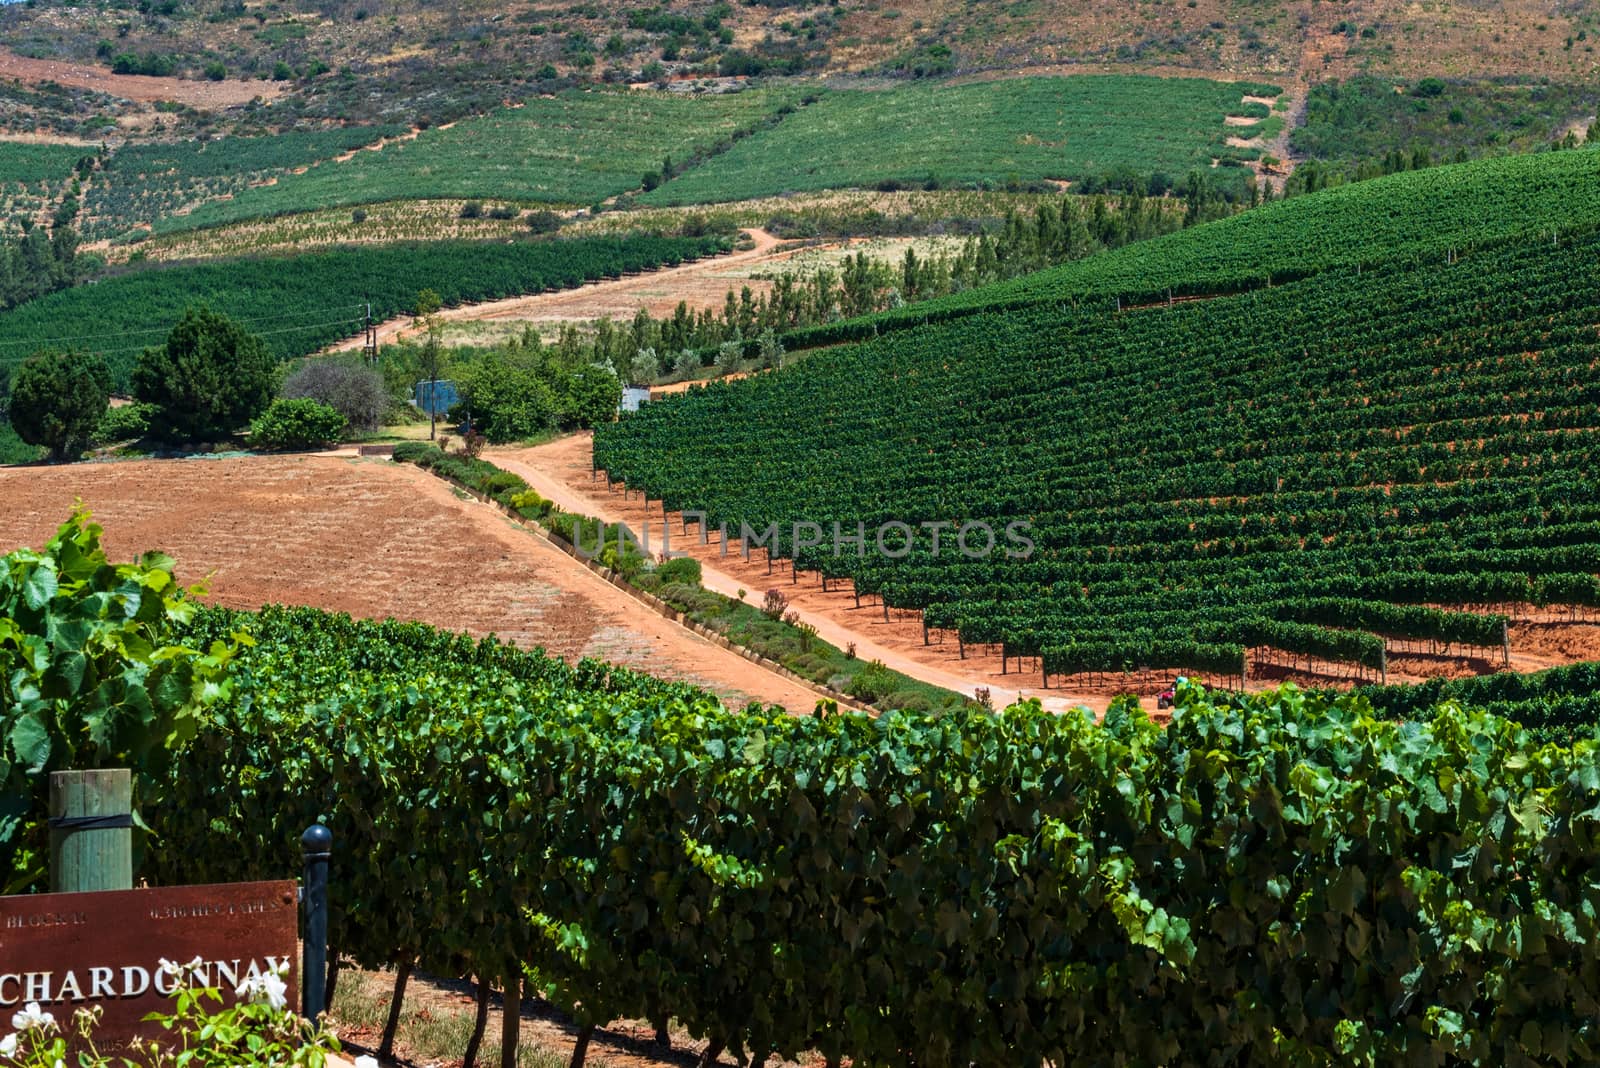 Vineyard in South Africa by jfbenning